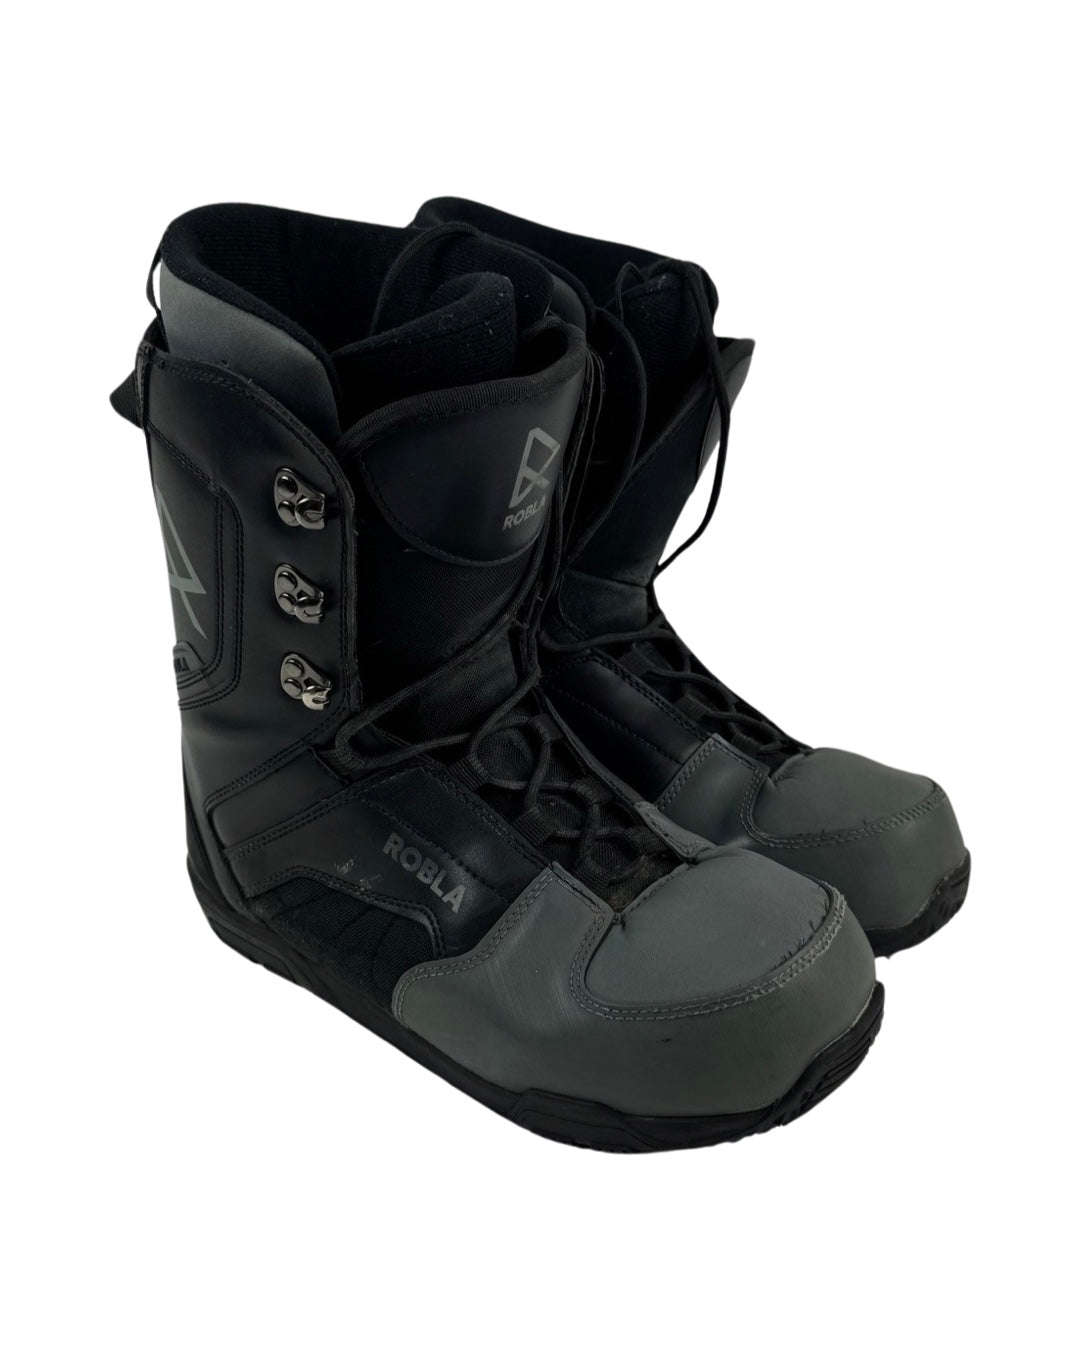 Robla Black Boots